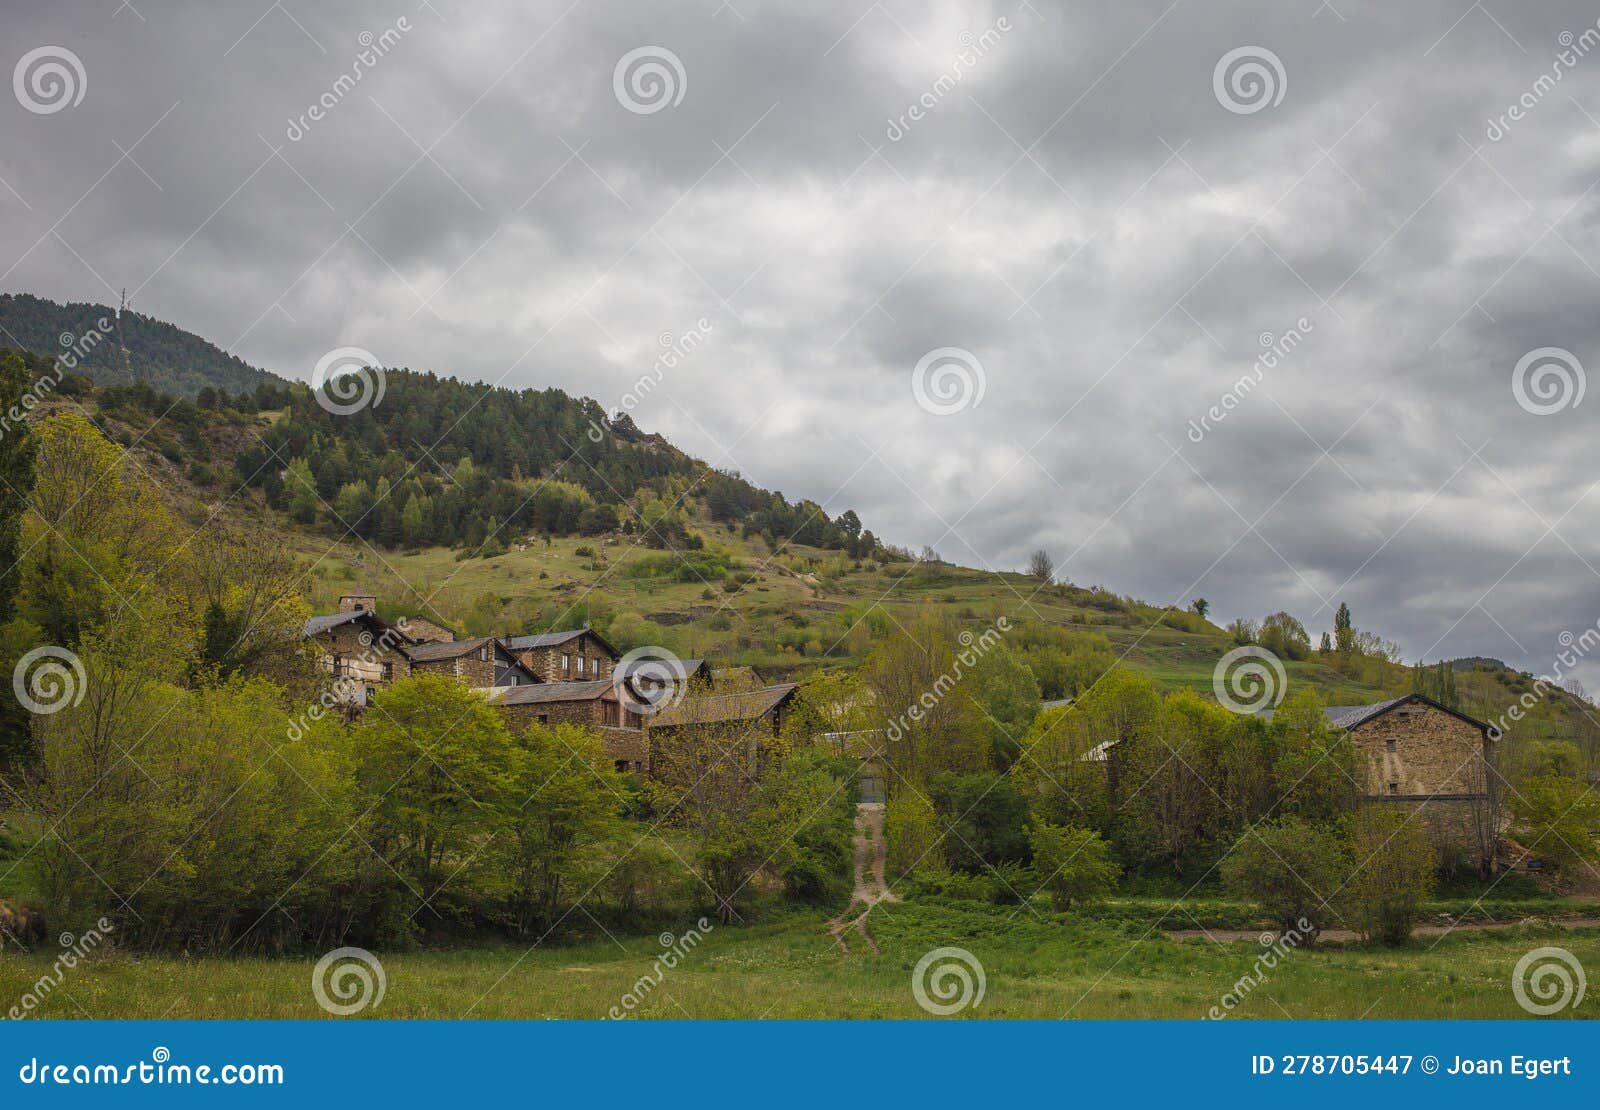 pyrenees mountain village of ars